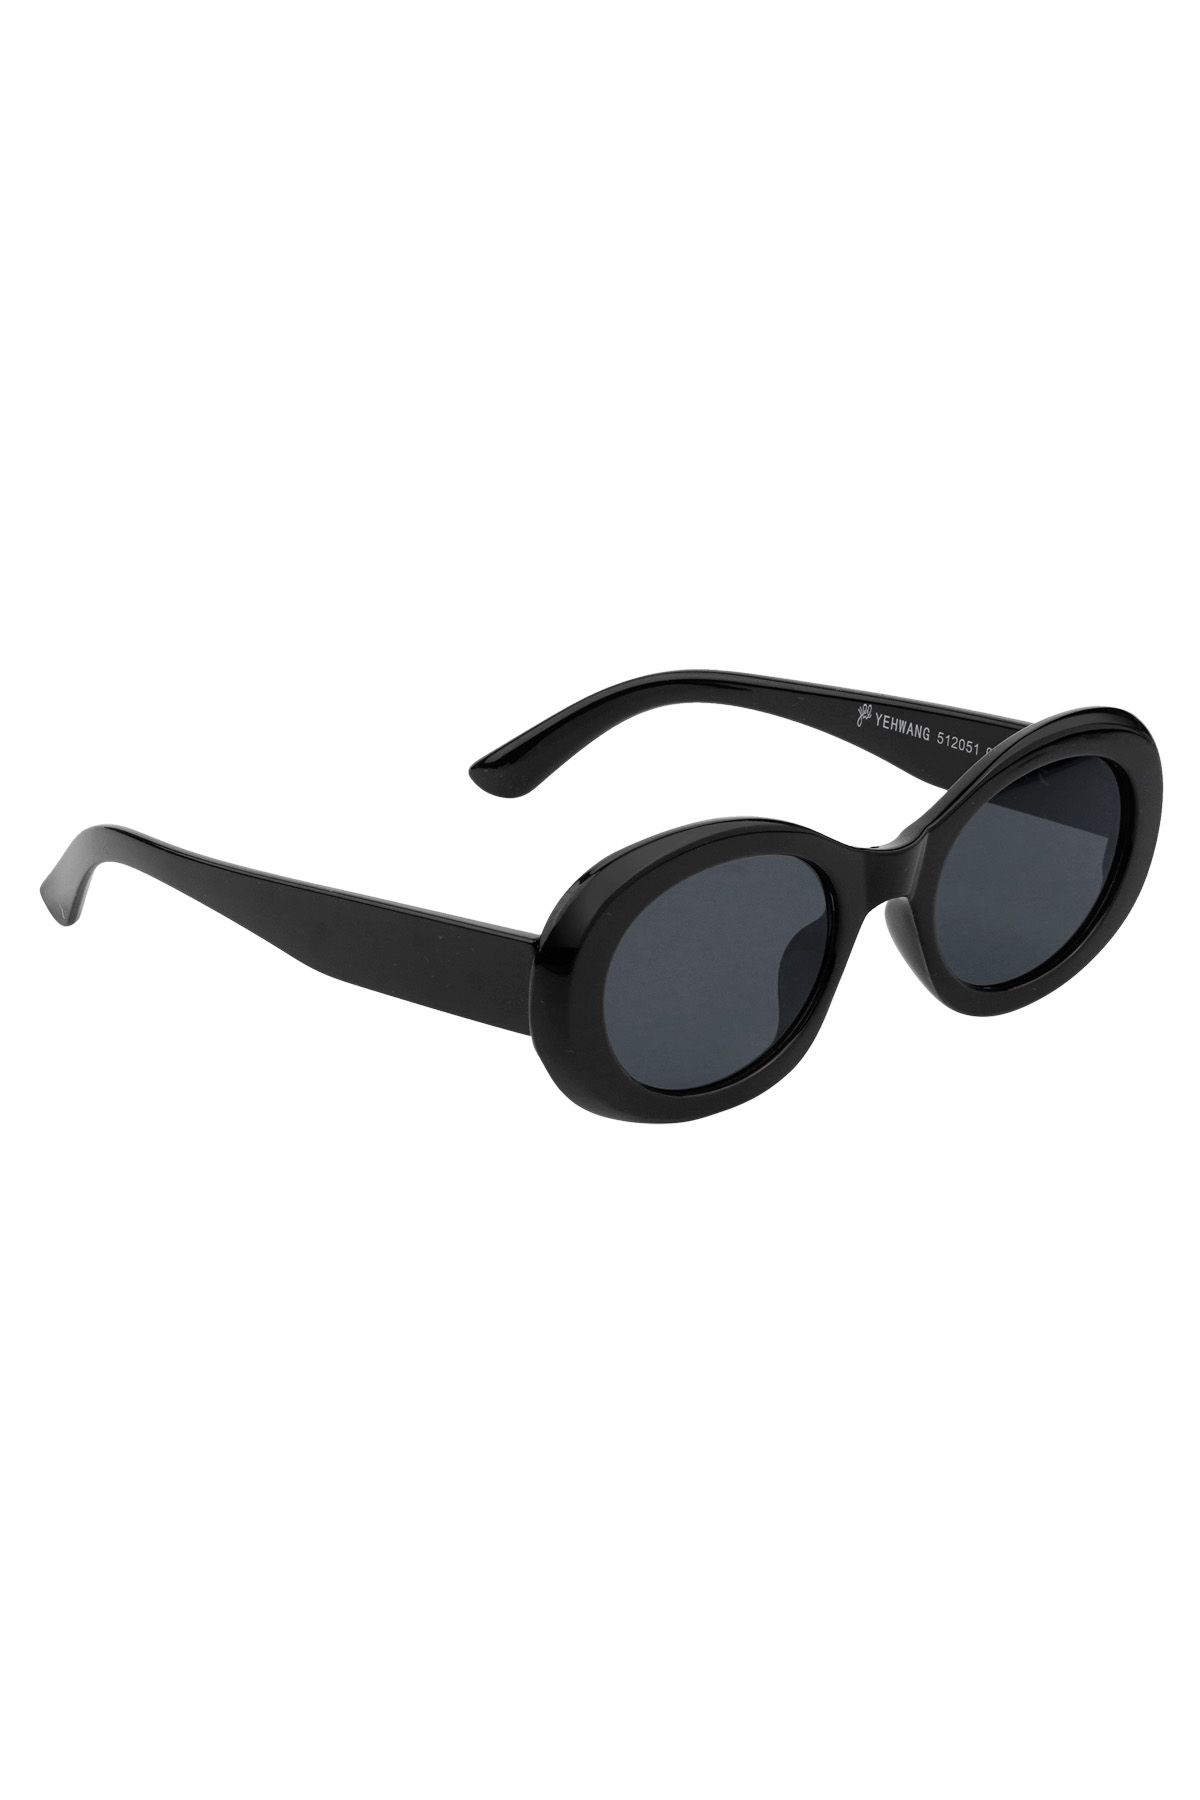 Sunglasses classy look a like - black